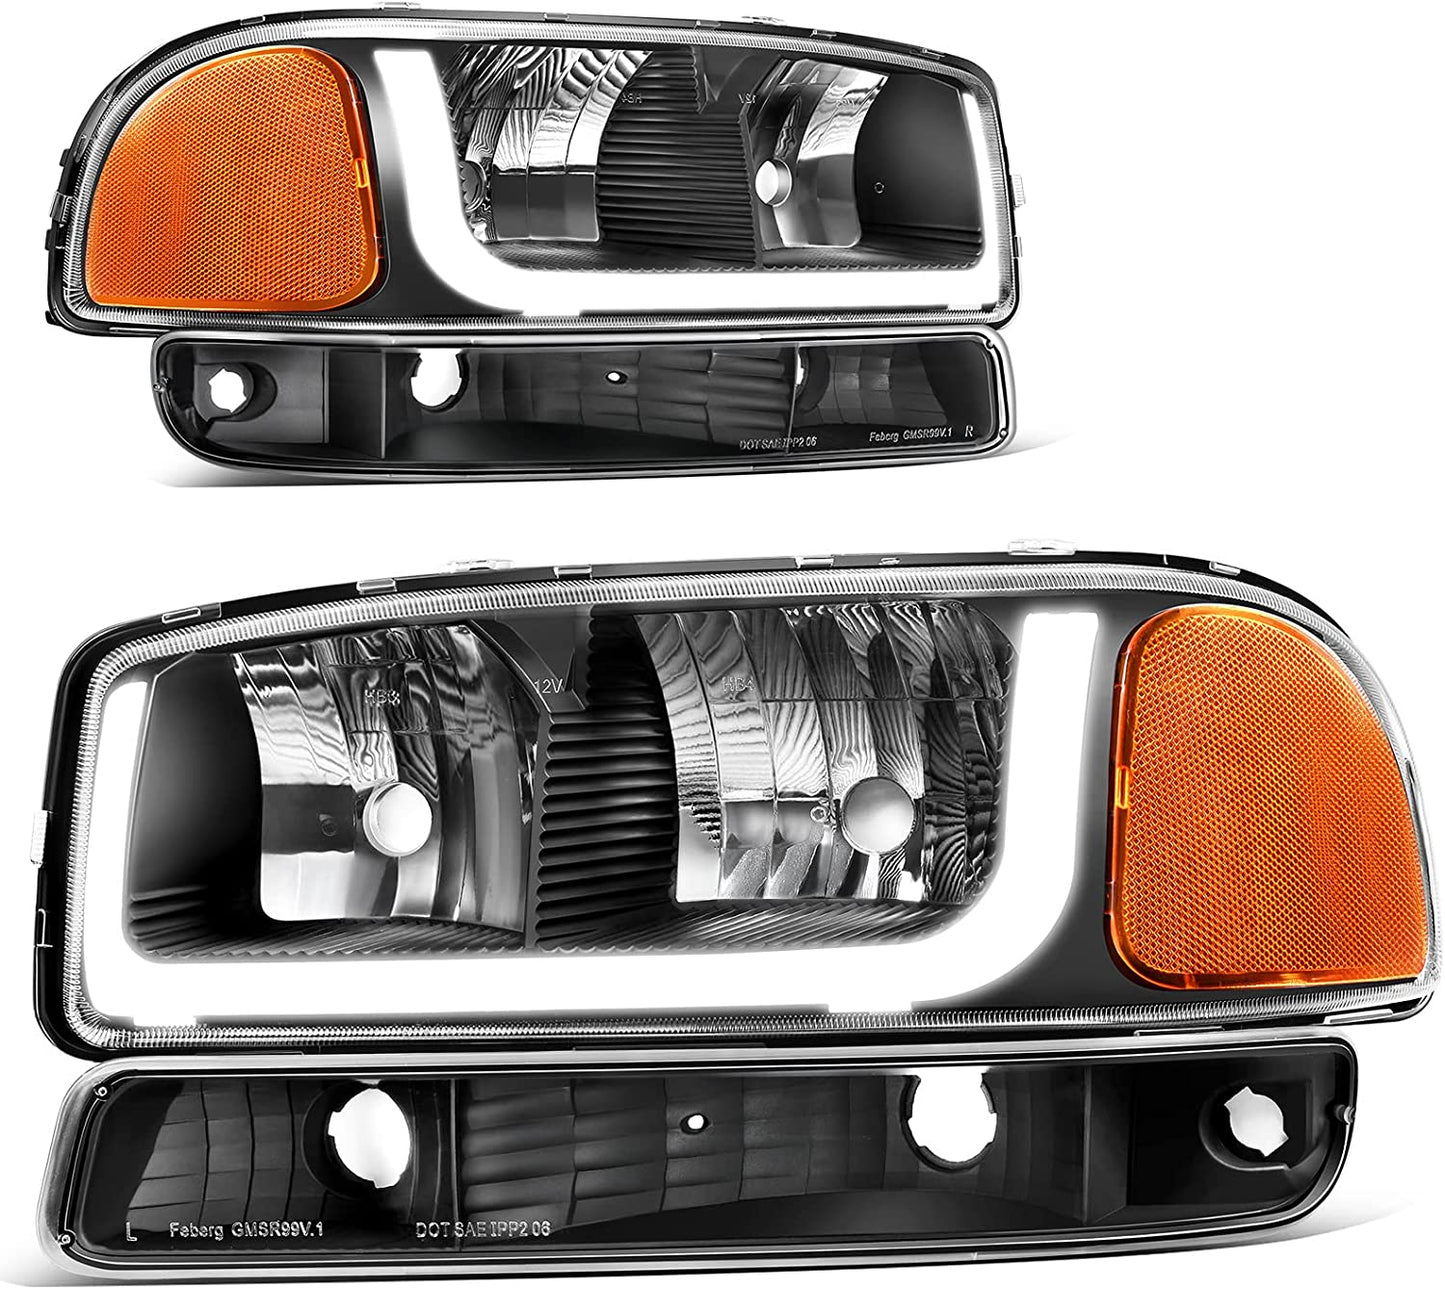 AmeriLite 2013-2015 Altima 4Dr Sedan Replacement Headlights Pair Halogen Type - Driver and Passenger Side